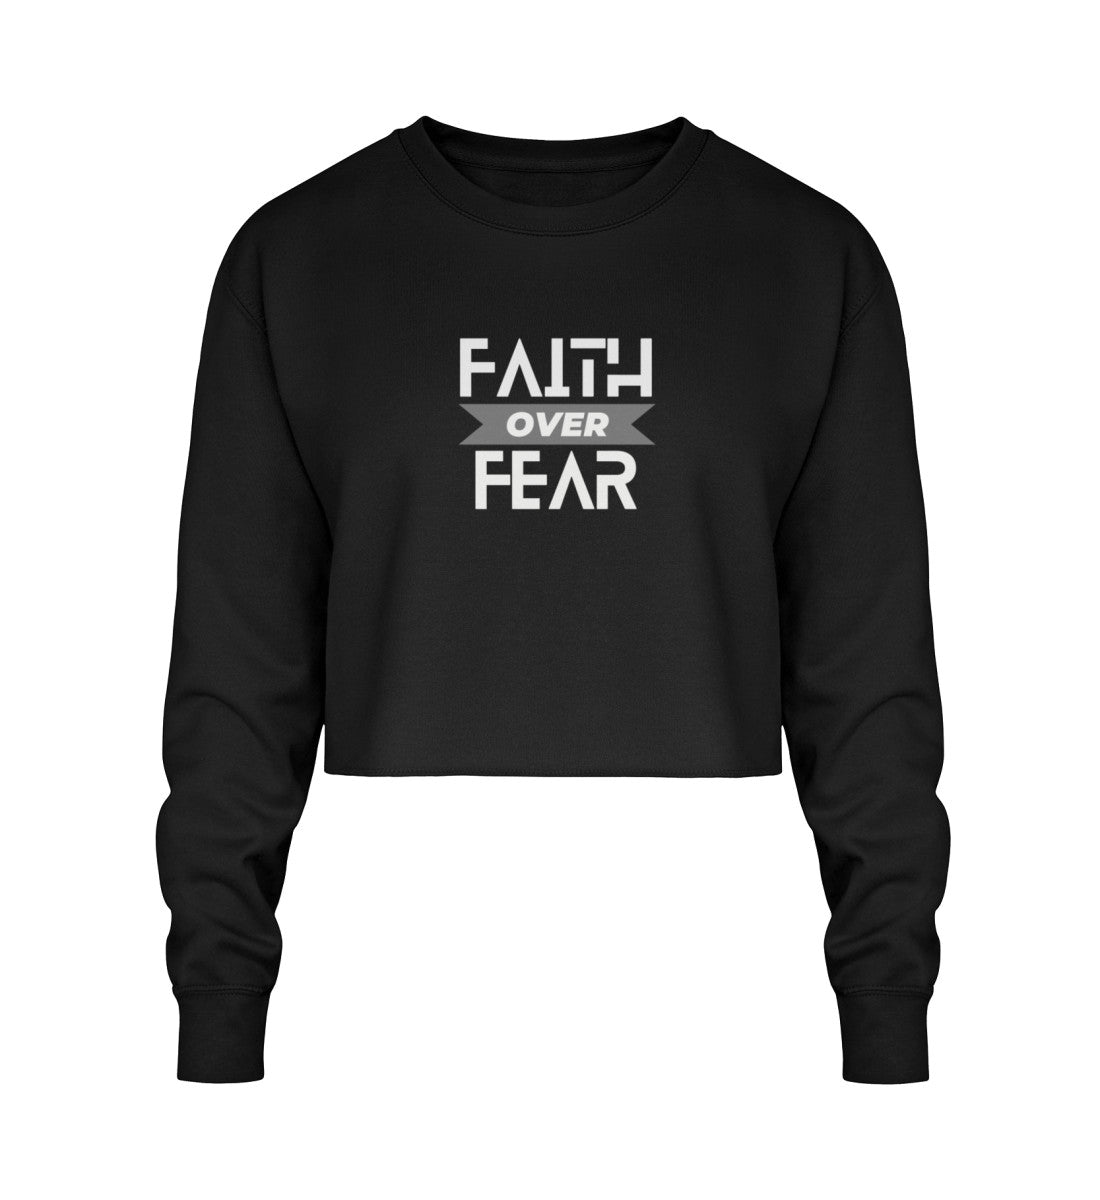 FAITH OVER FEAR - GAMECHARM Exklusiv WOMAN - Crop Sweatshirt - GAMECHARM